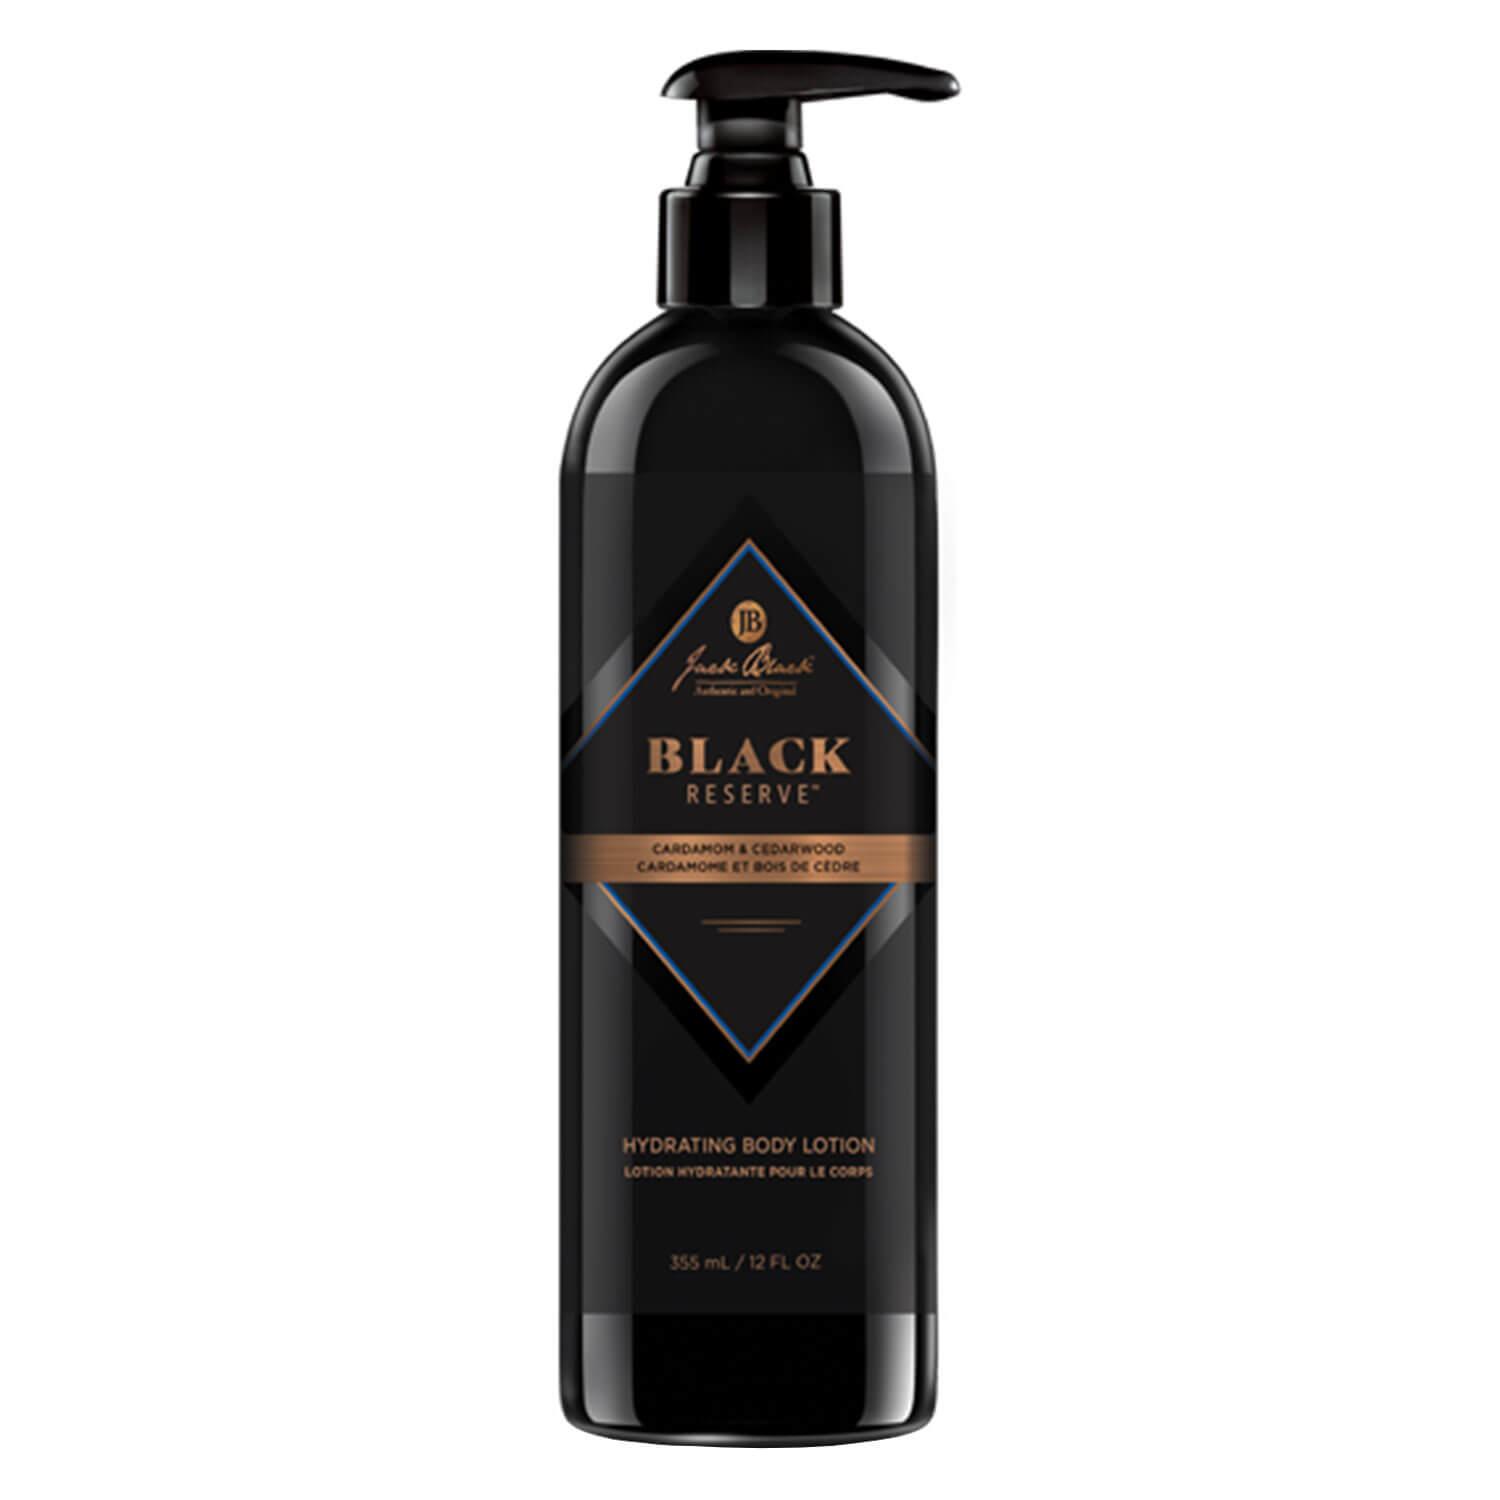 Black Reserve - Hydrating Body Lotion